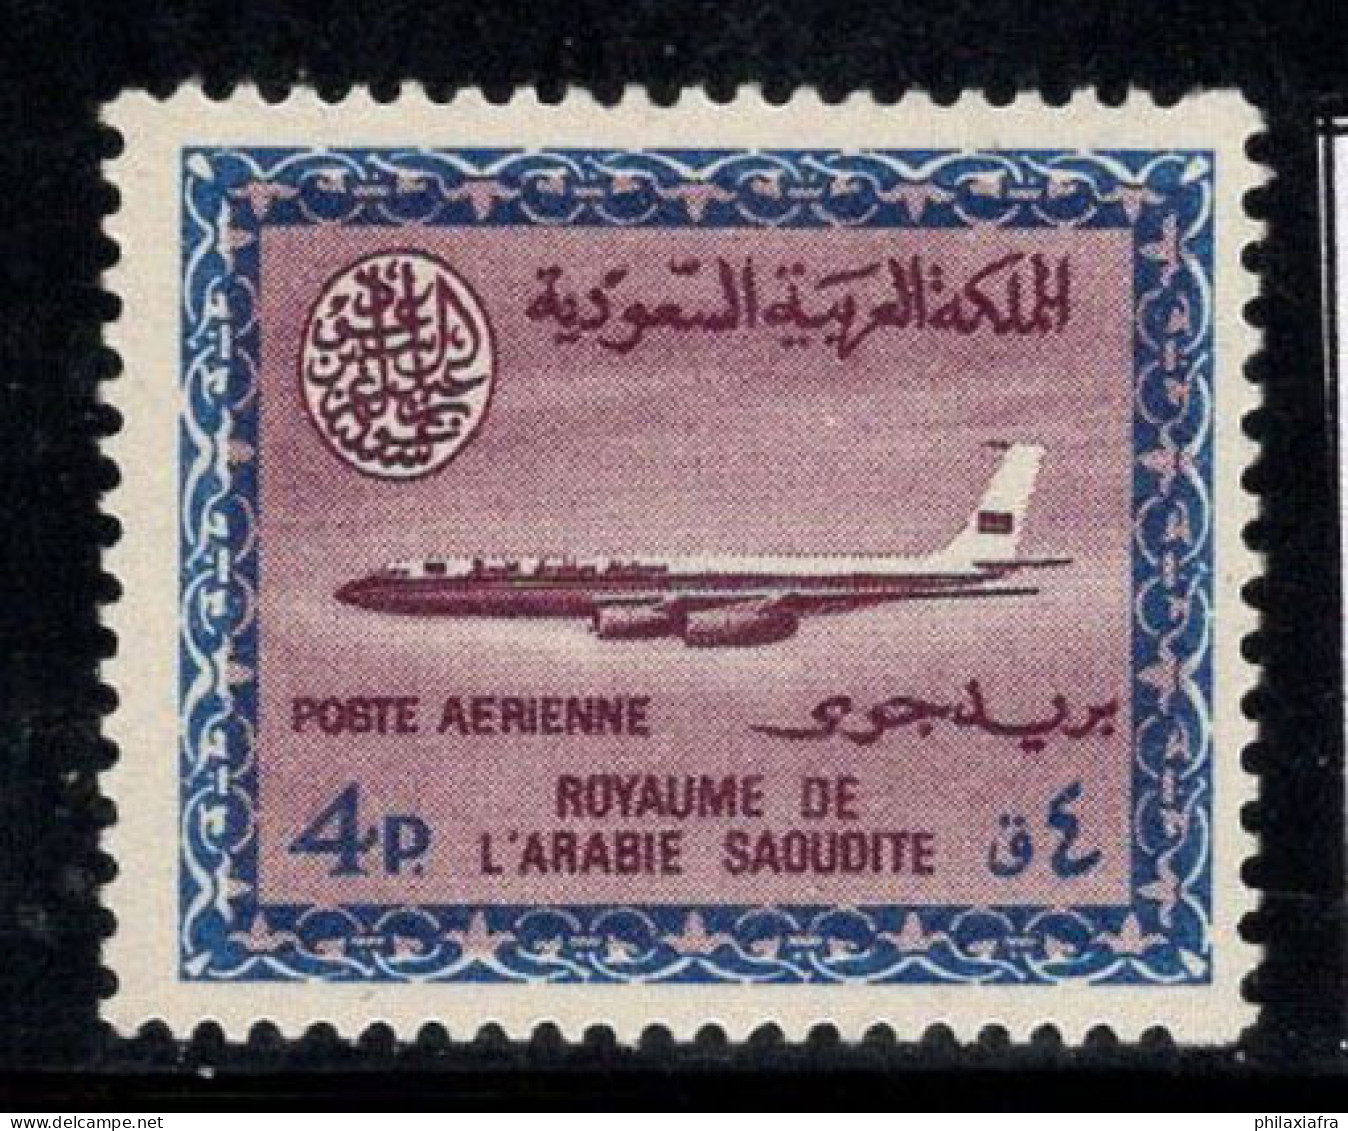 Arabie Saoudite 1965-72 Mi. 245 Neuf ** 100% Poste Aérienne 4 Pia, Boeing 720 B - Saudi-Arabien